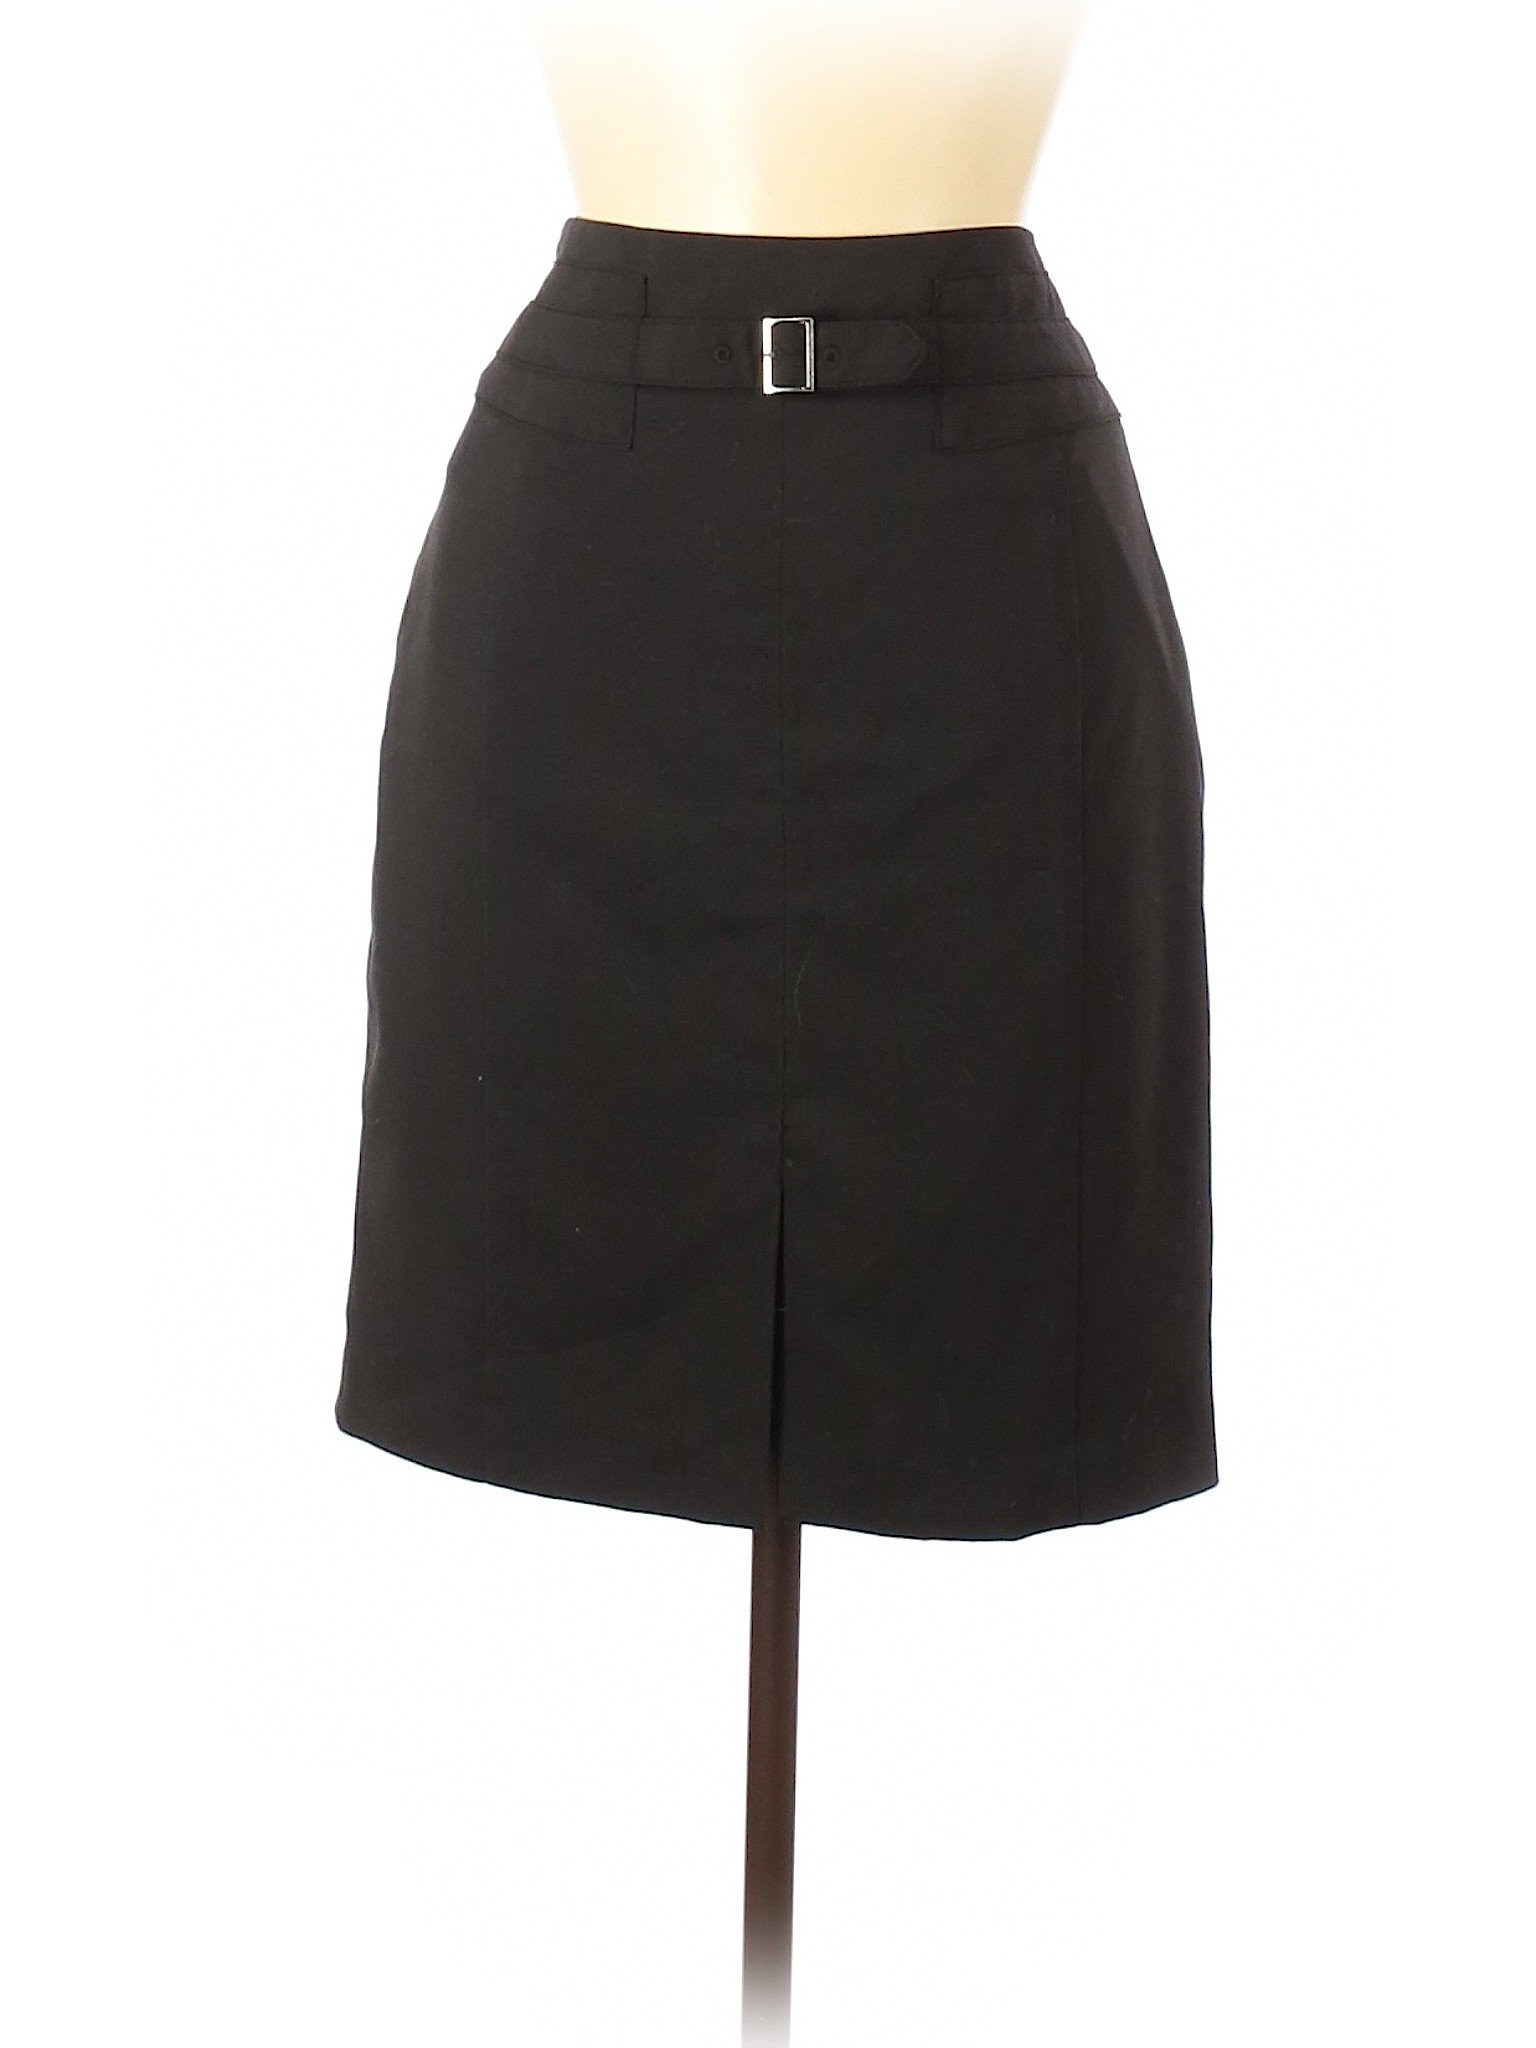 Express Women Black Casual Skirt 6 | eBay